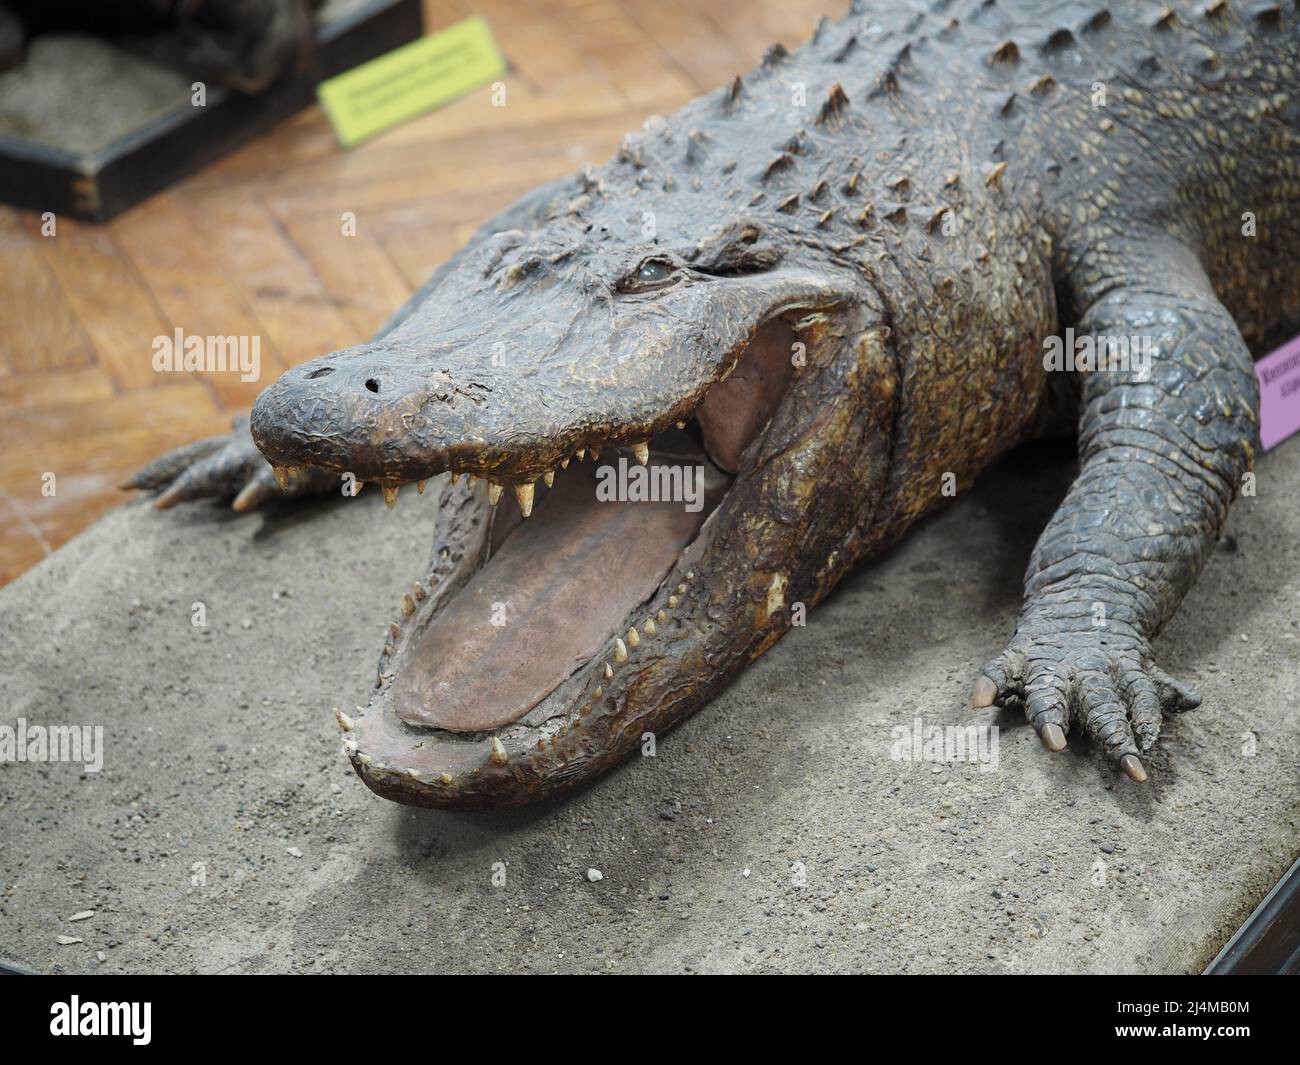 The muzzle of an allgator crocodile, close-up. Stock Photo